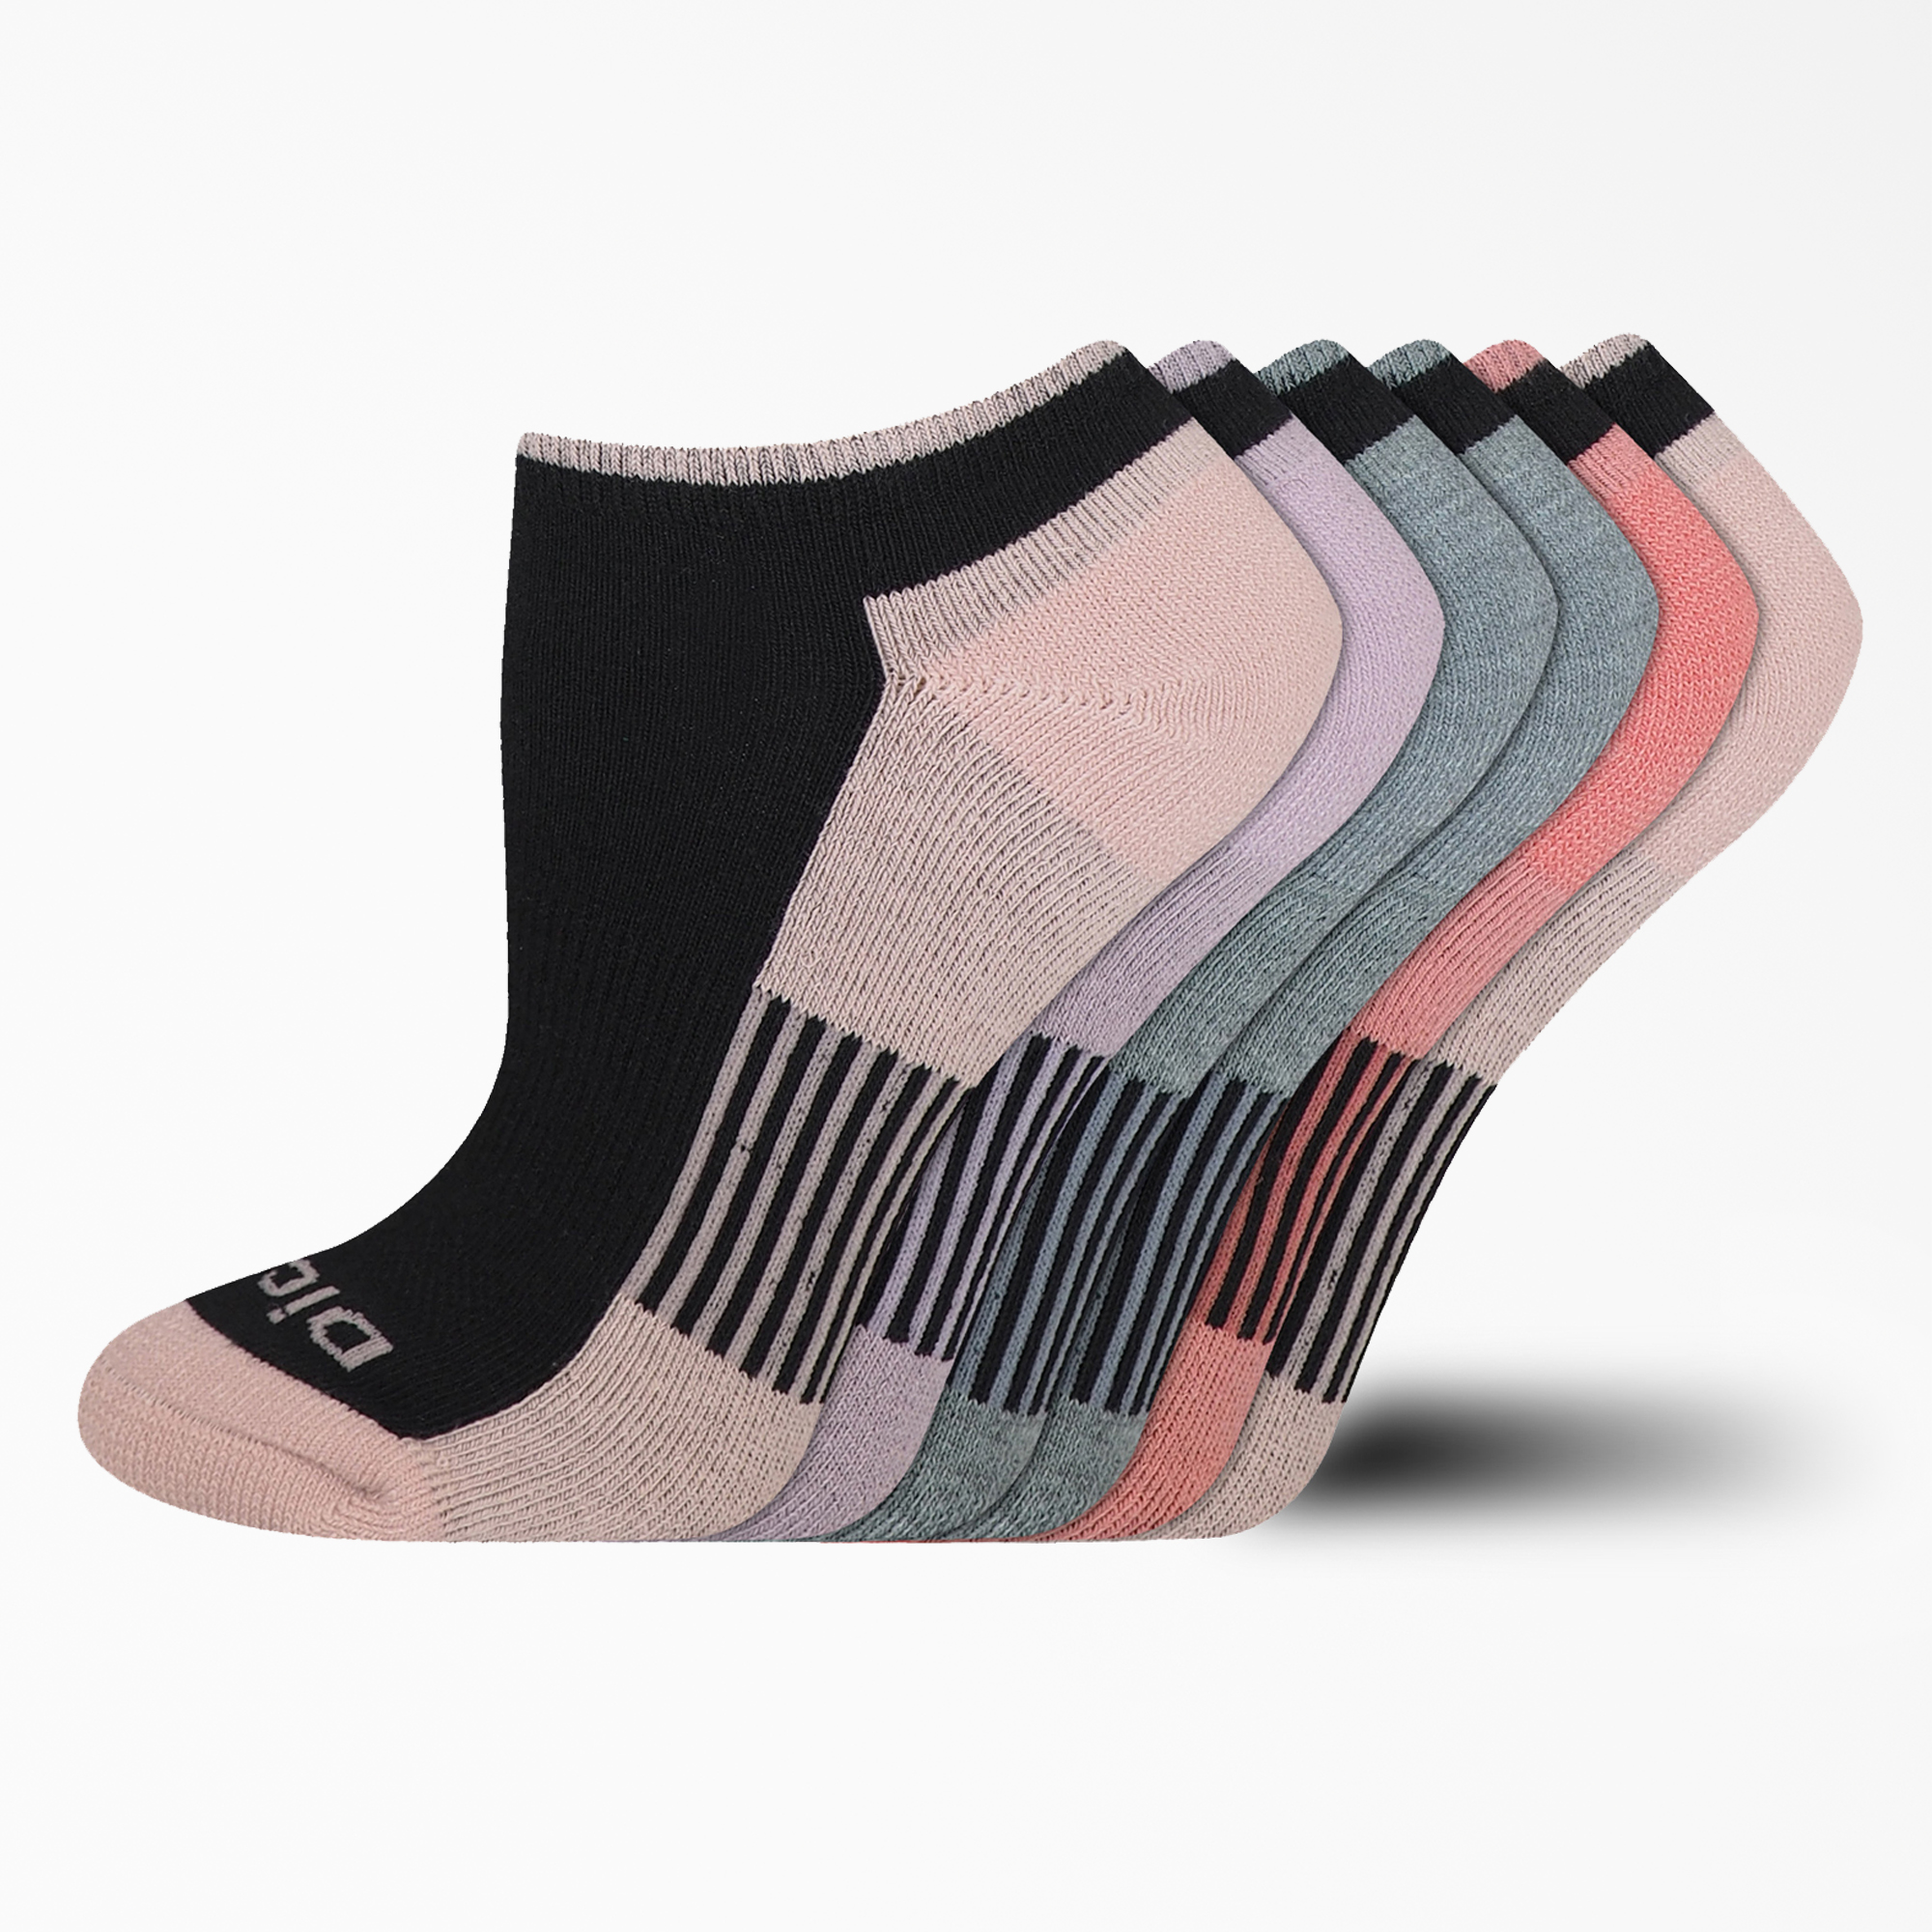 Women's Dri-Tech No Show Socks, 6-Pack - Black (BK)